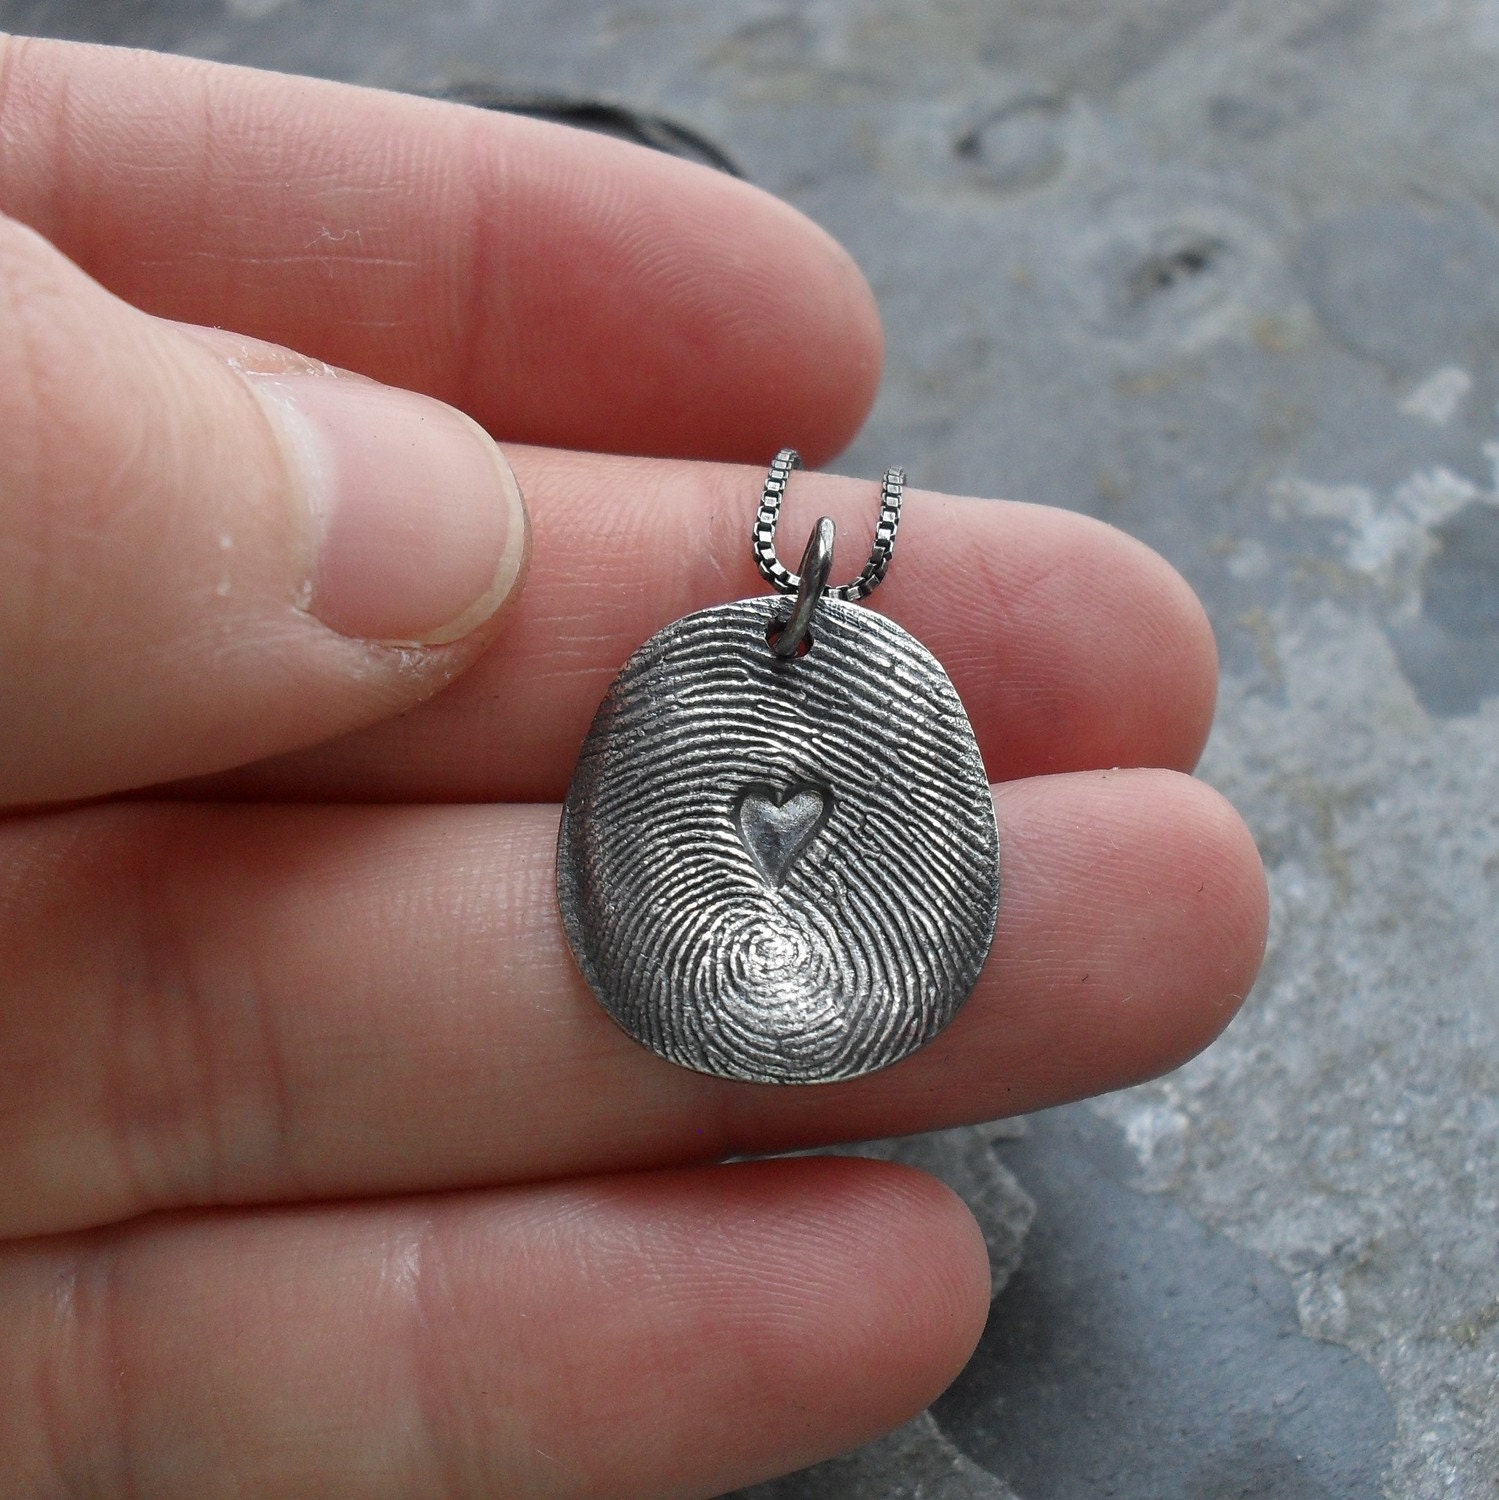 thumbprint necklace